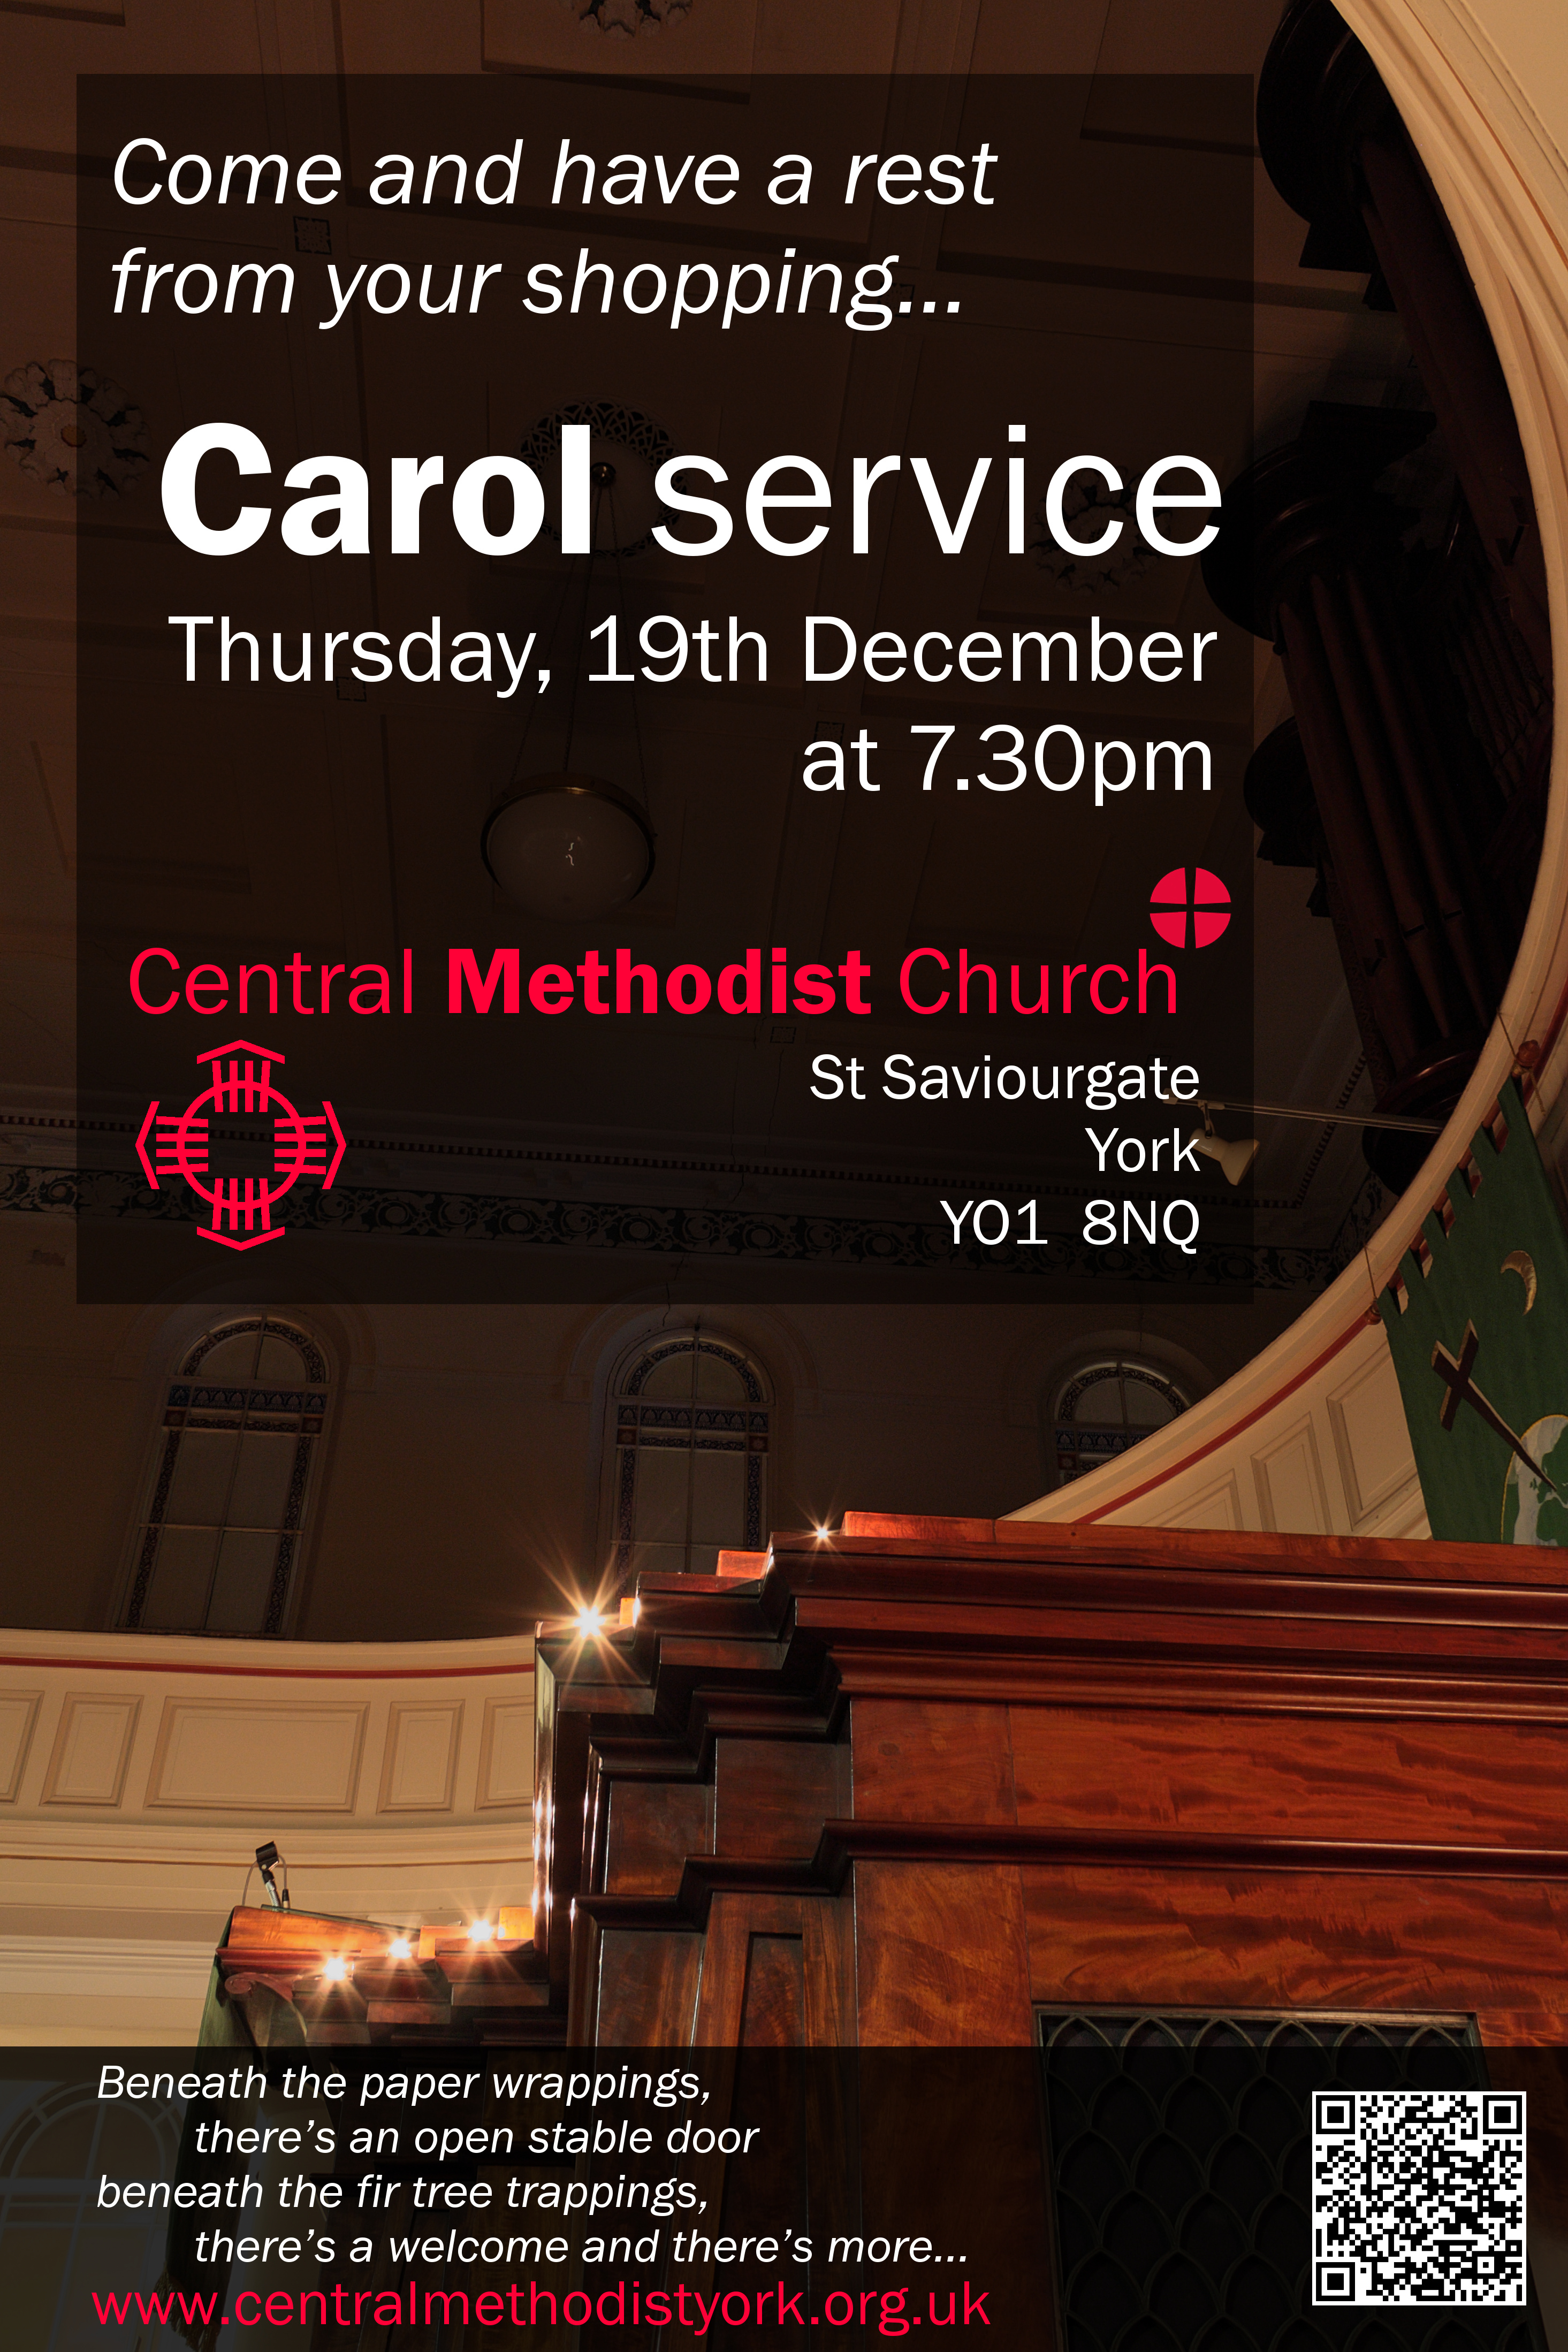 Carol service 19th December 7.30pm